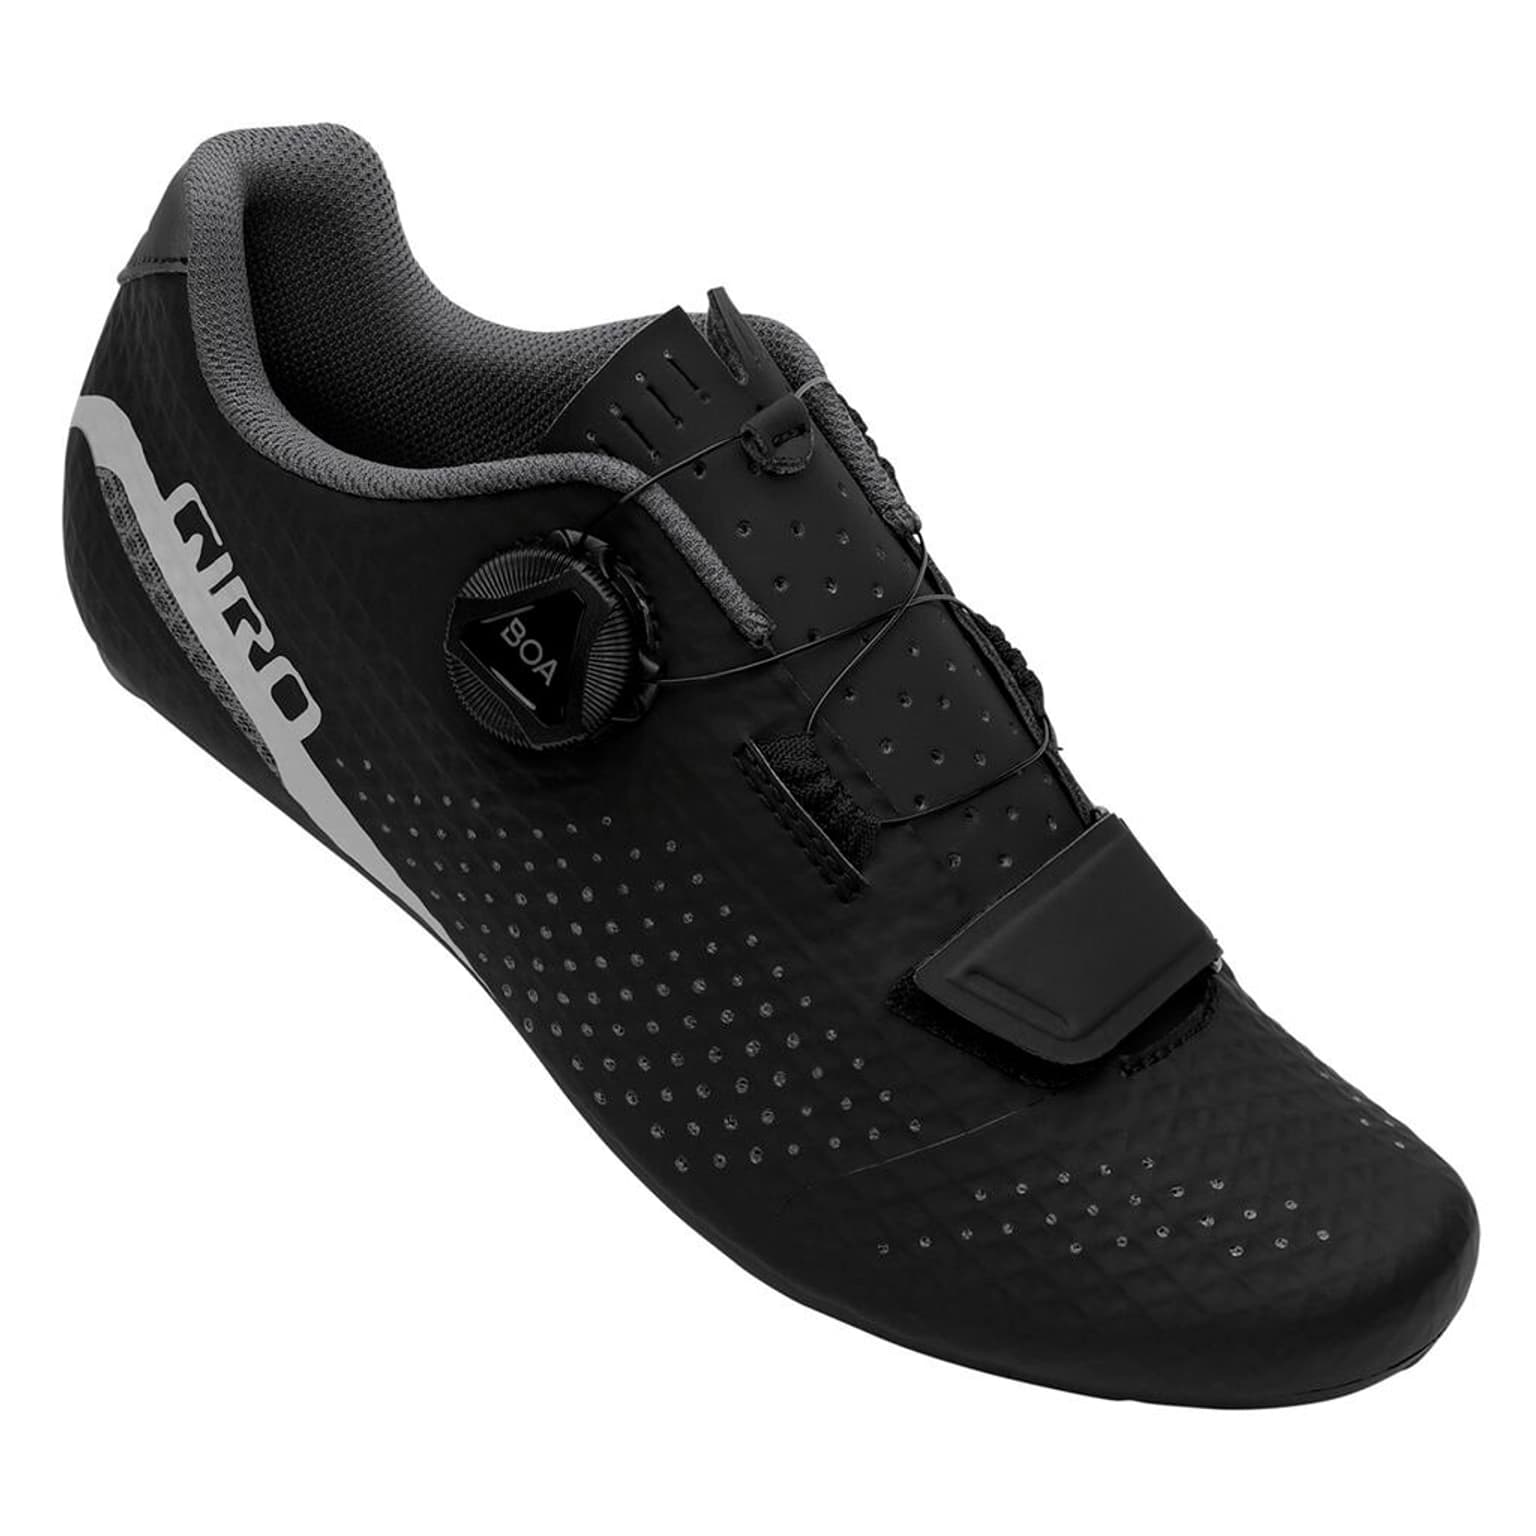 Giro Giro Cadet W Shoe Chaussures de cyclisme noir 2